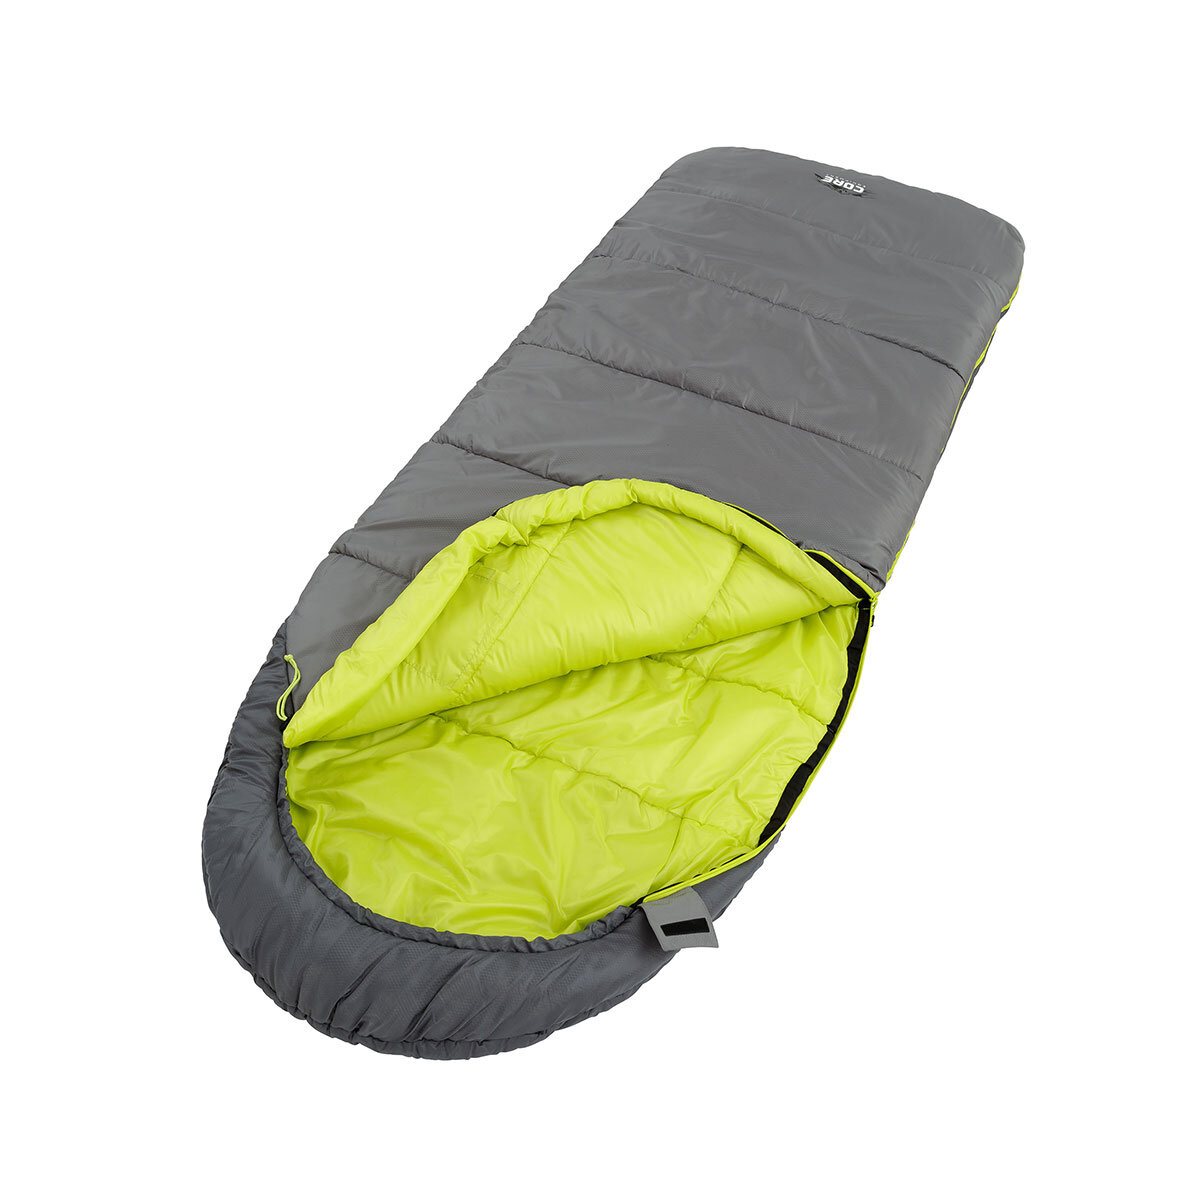 image for Core sleeping bag